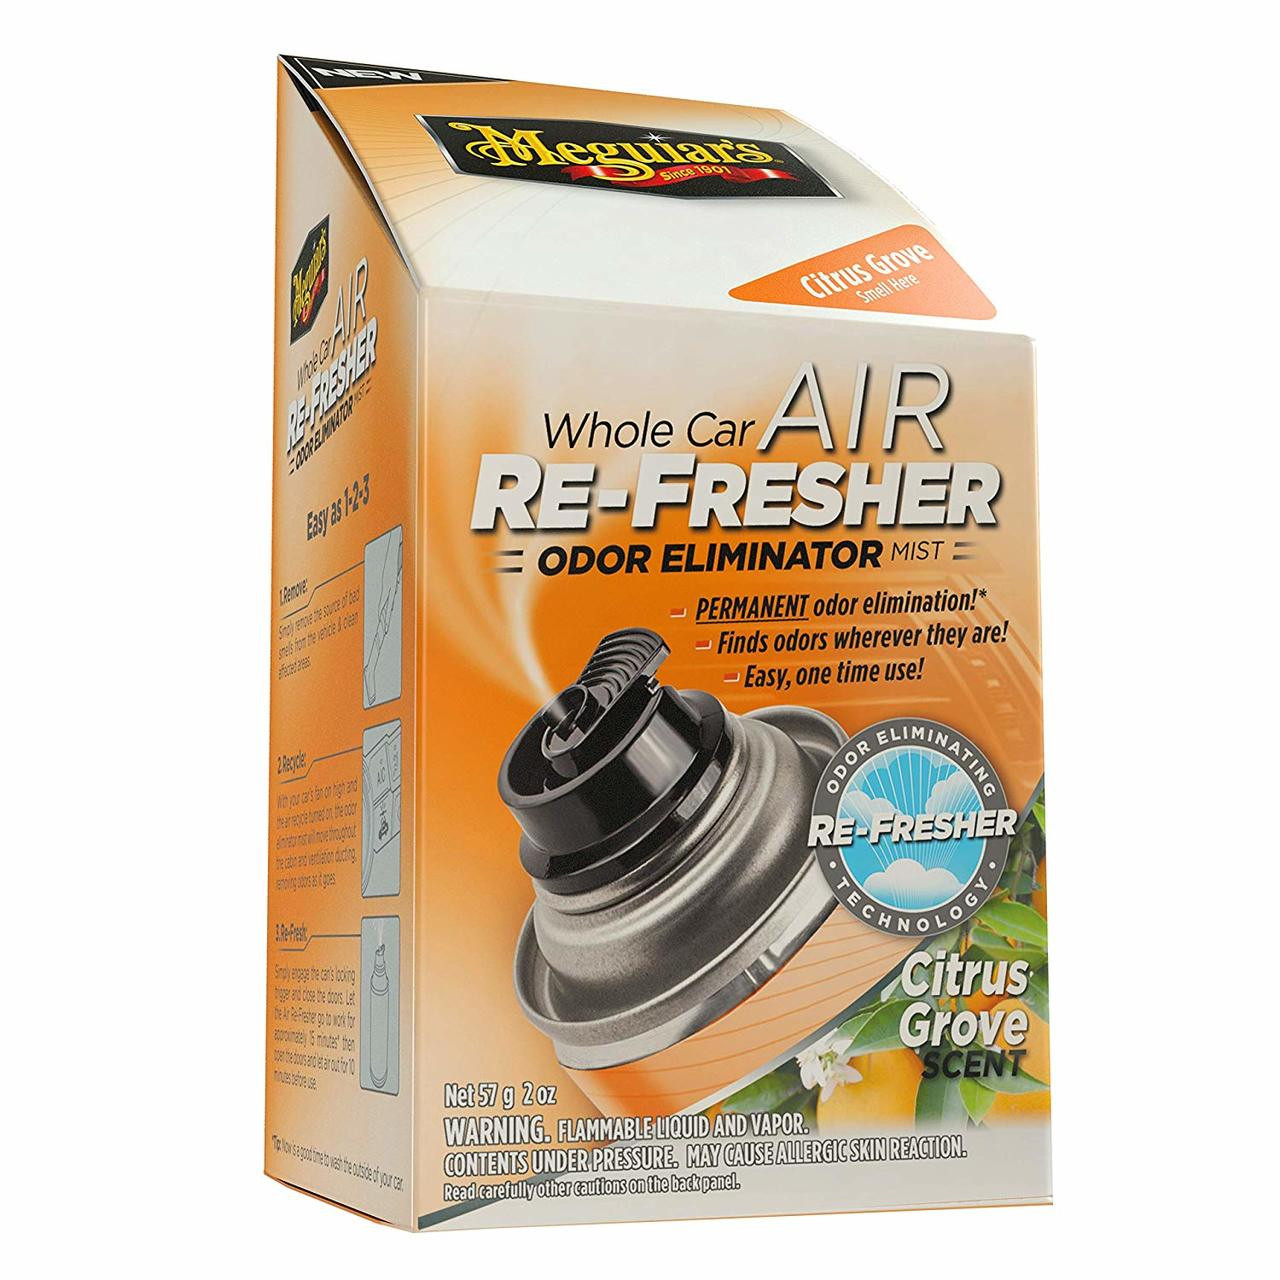 Meguiars G16502 Whole Car Air Re-Fresher Odor Eliminator - Citrus